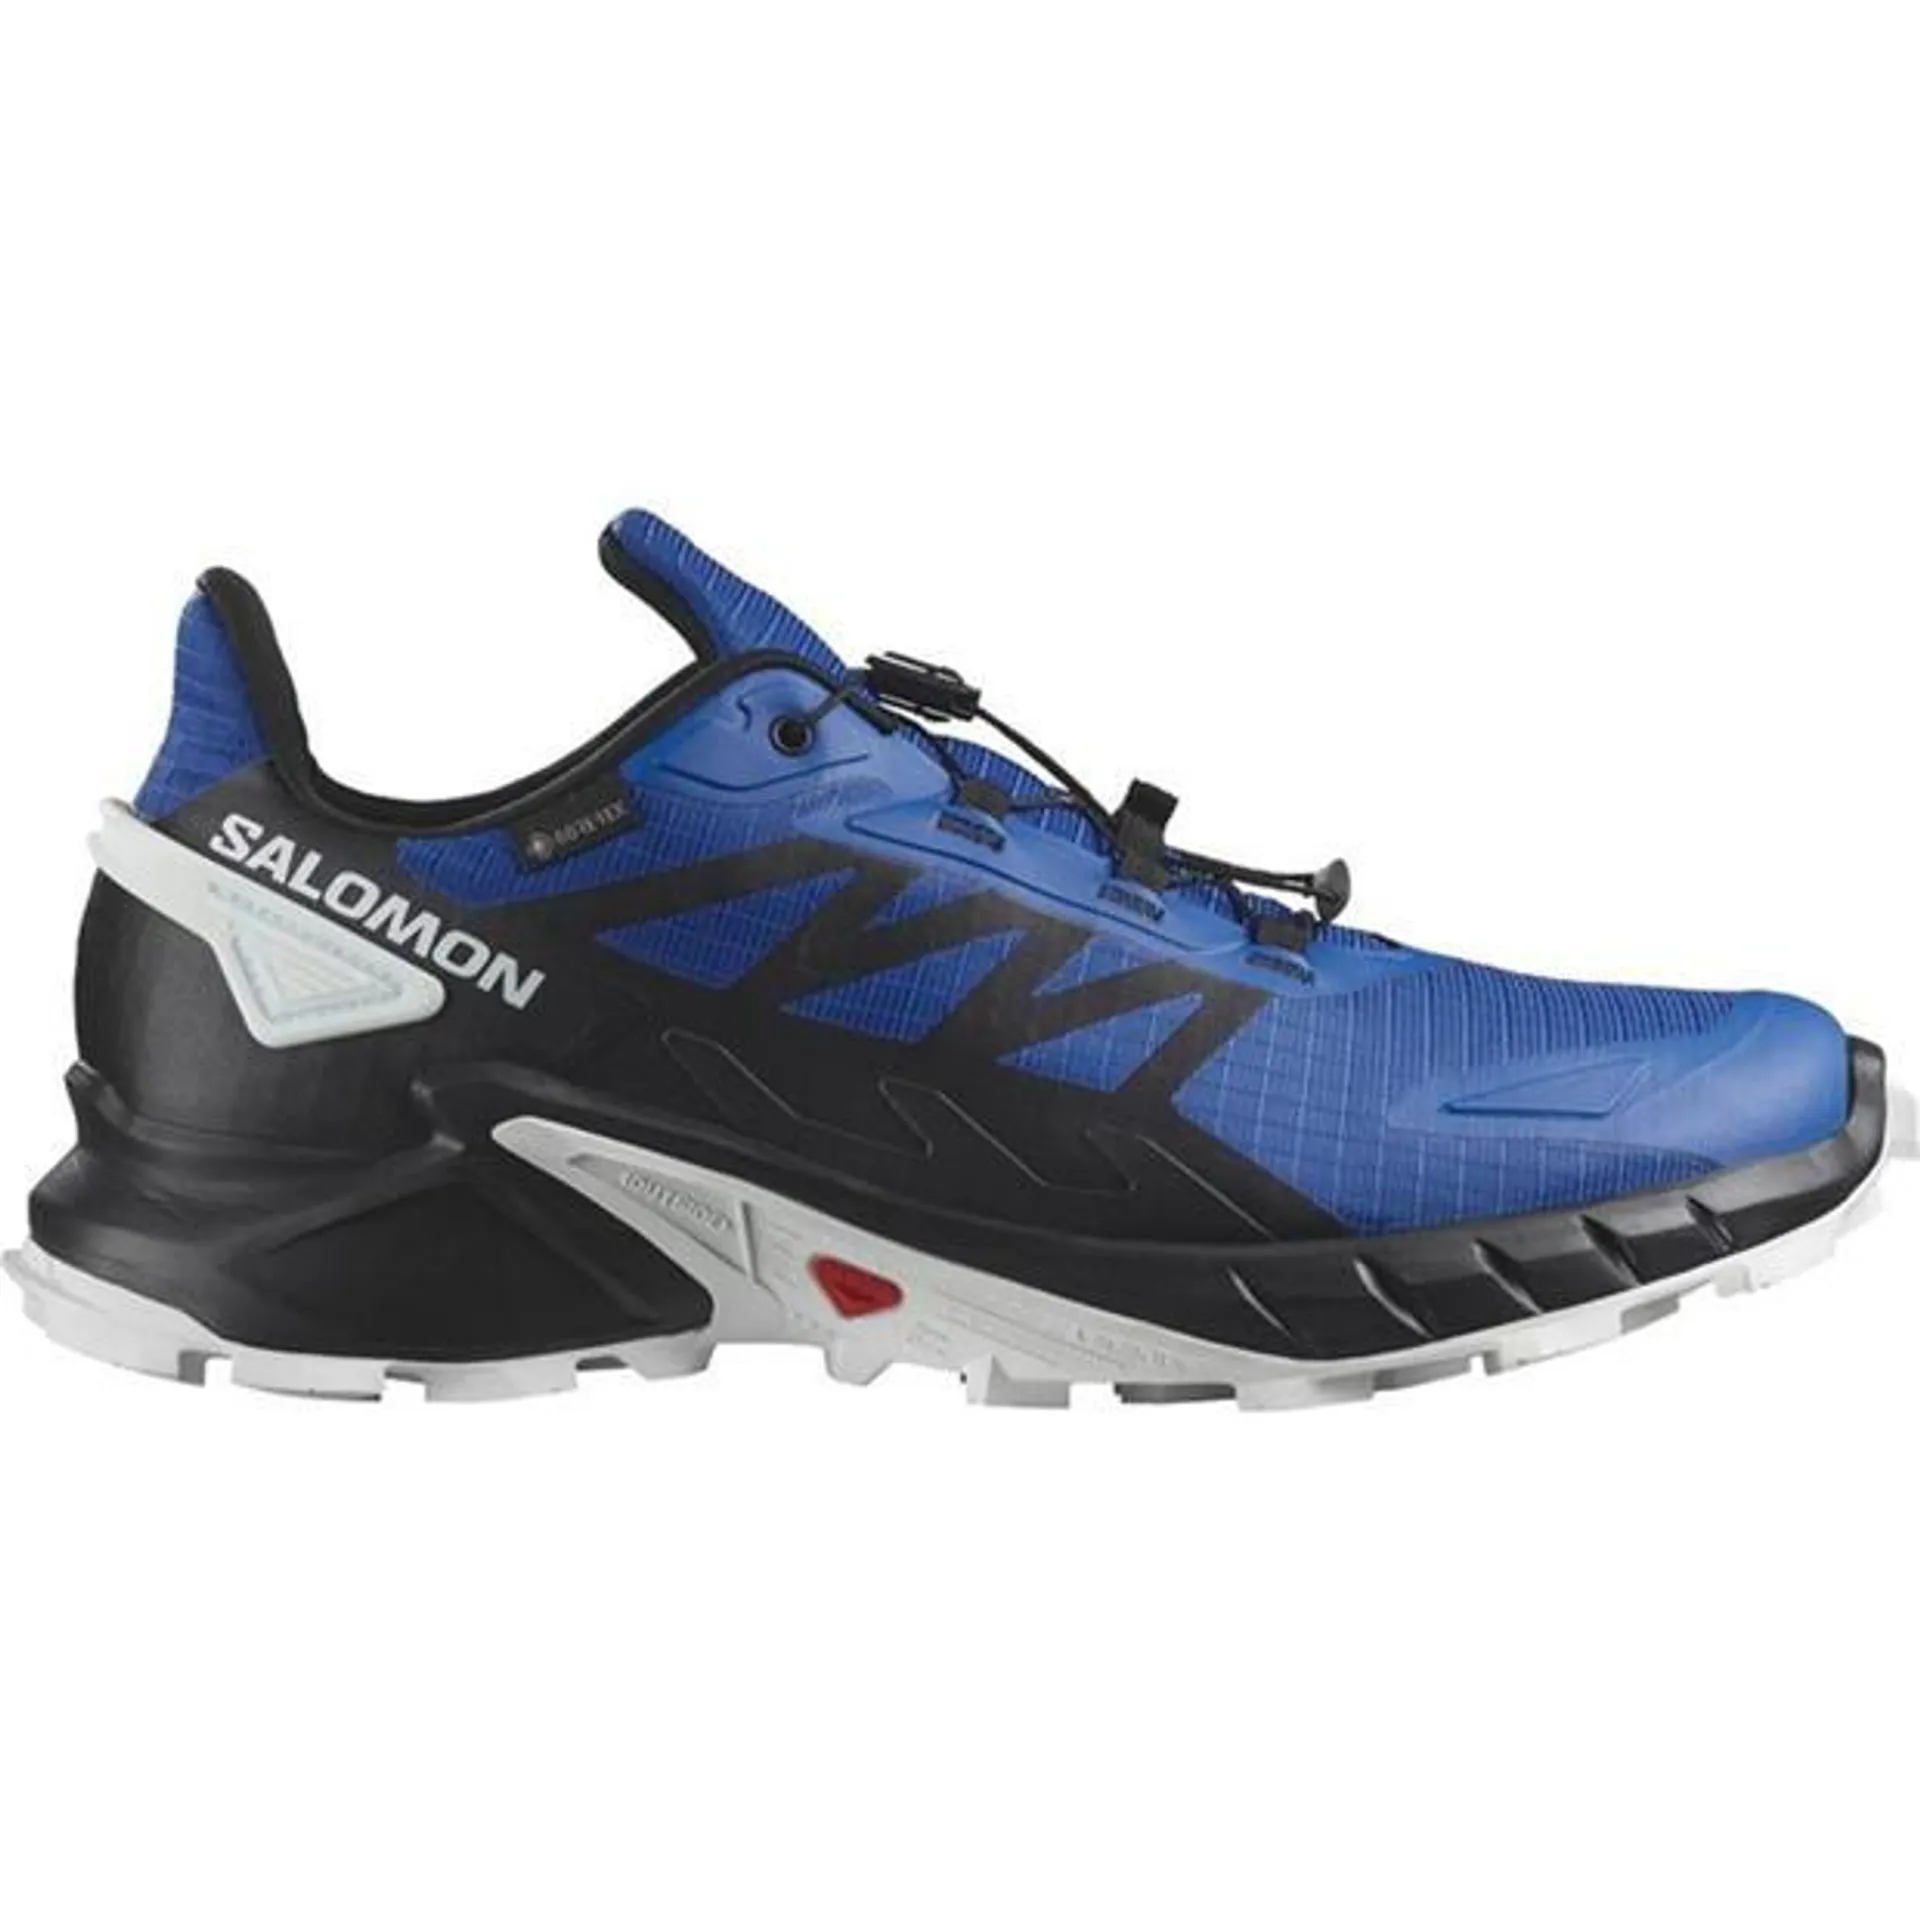 SuperCross 4 GTX Men's Trail Running Shoes